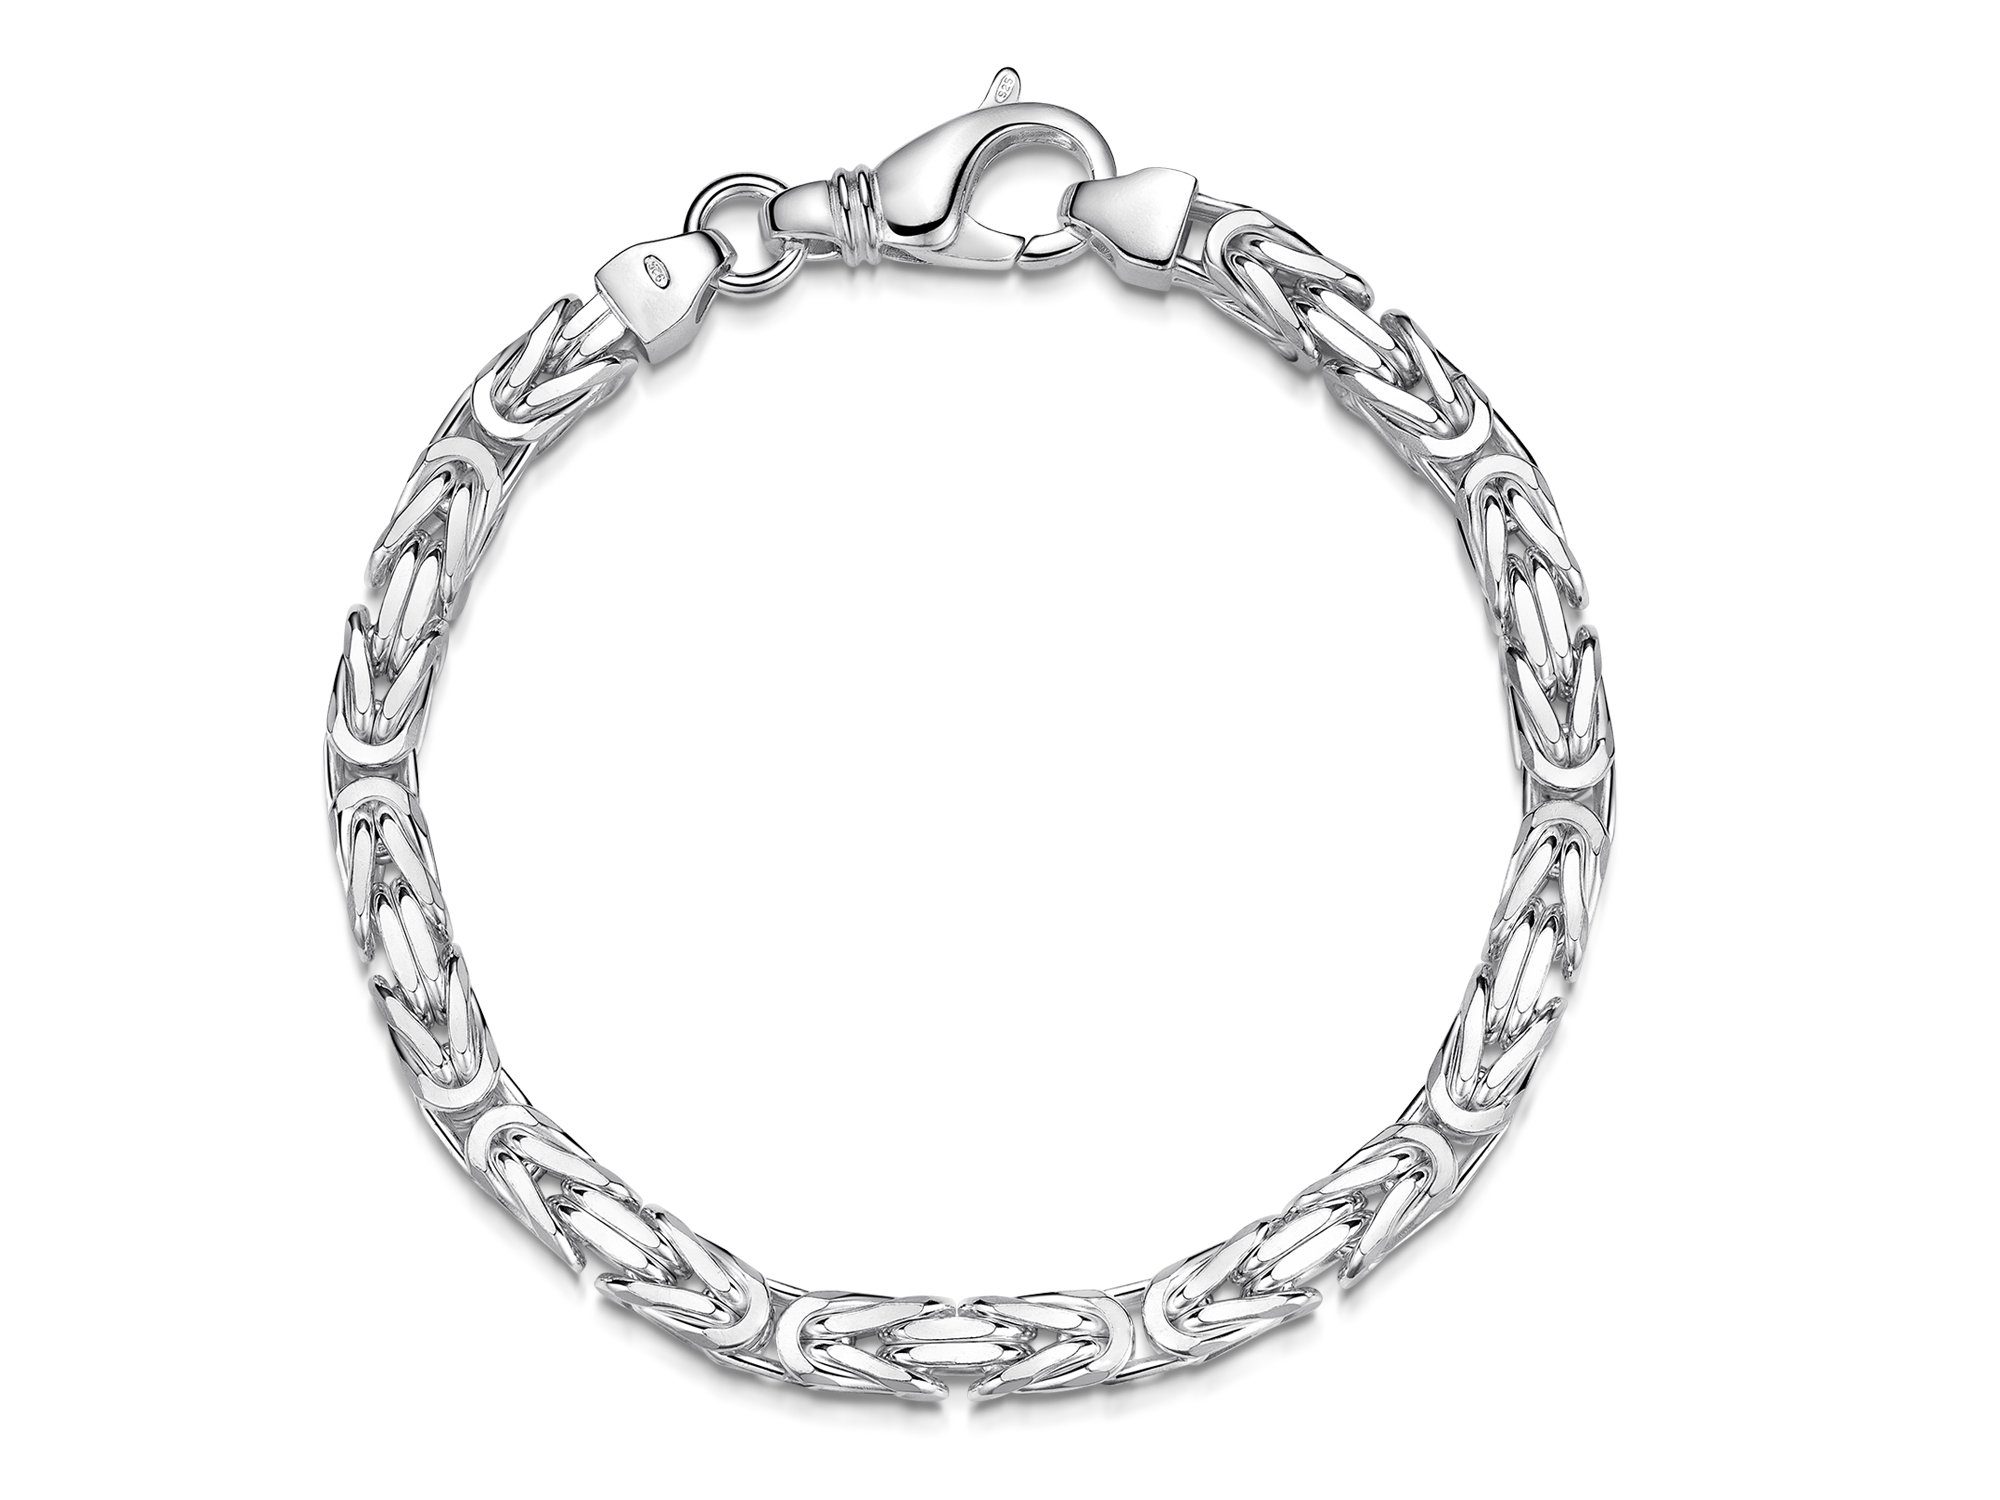 Königskette Armband 5mm Silber 925 Königsarmband Balikette Balichain bracelet 